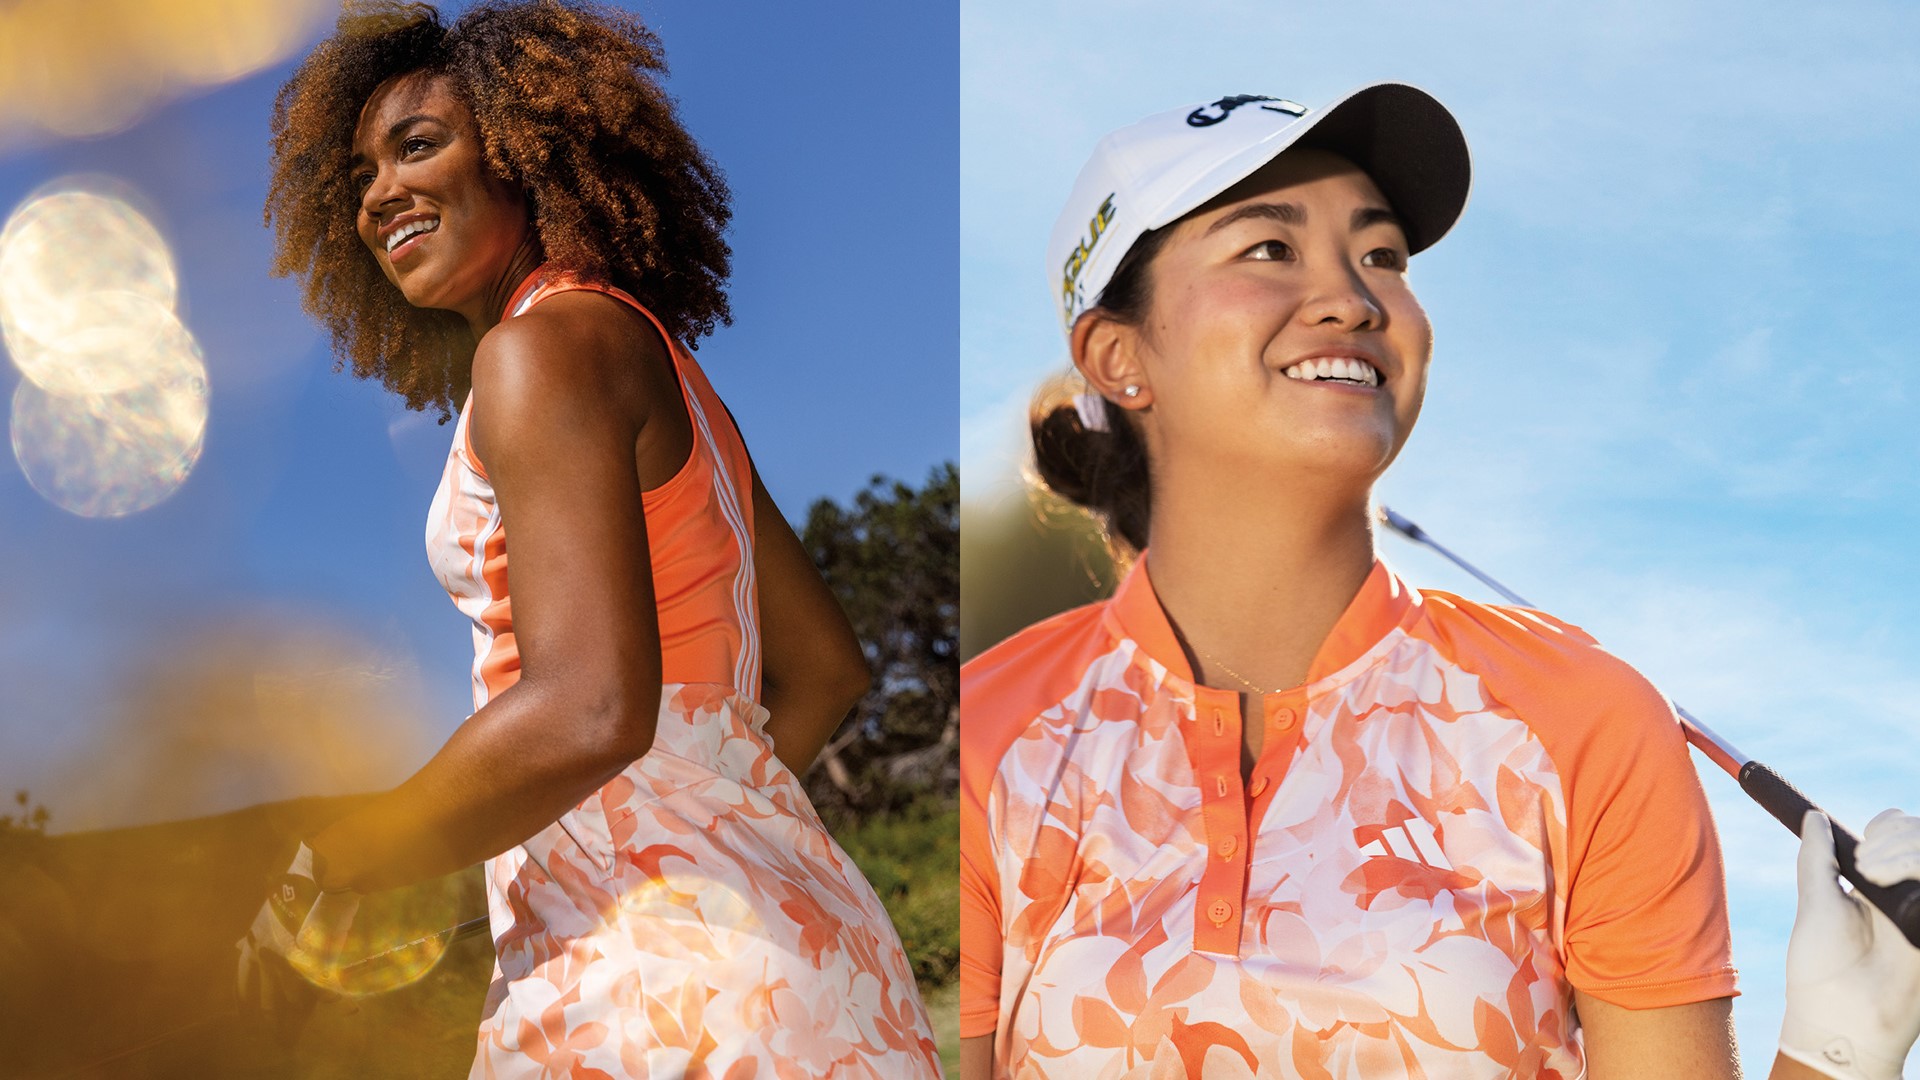 Women's Golf Dresses - Fairway Fittings